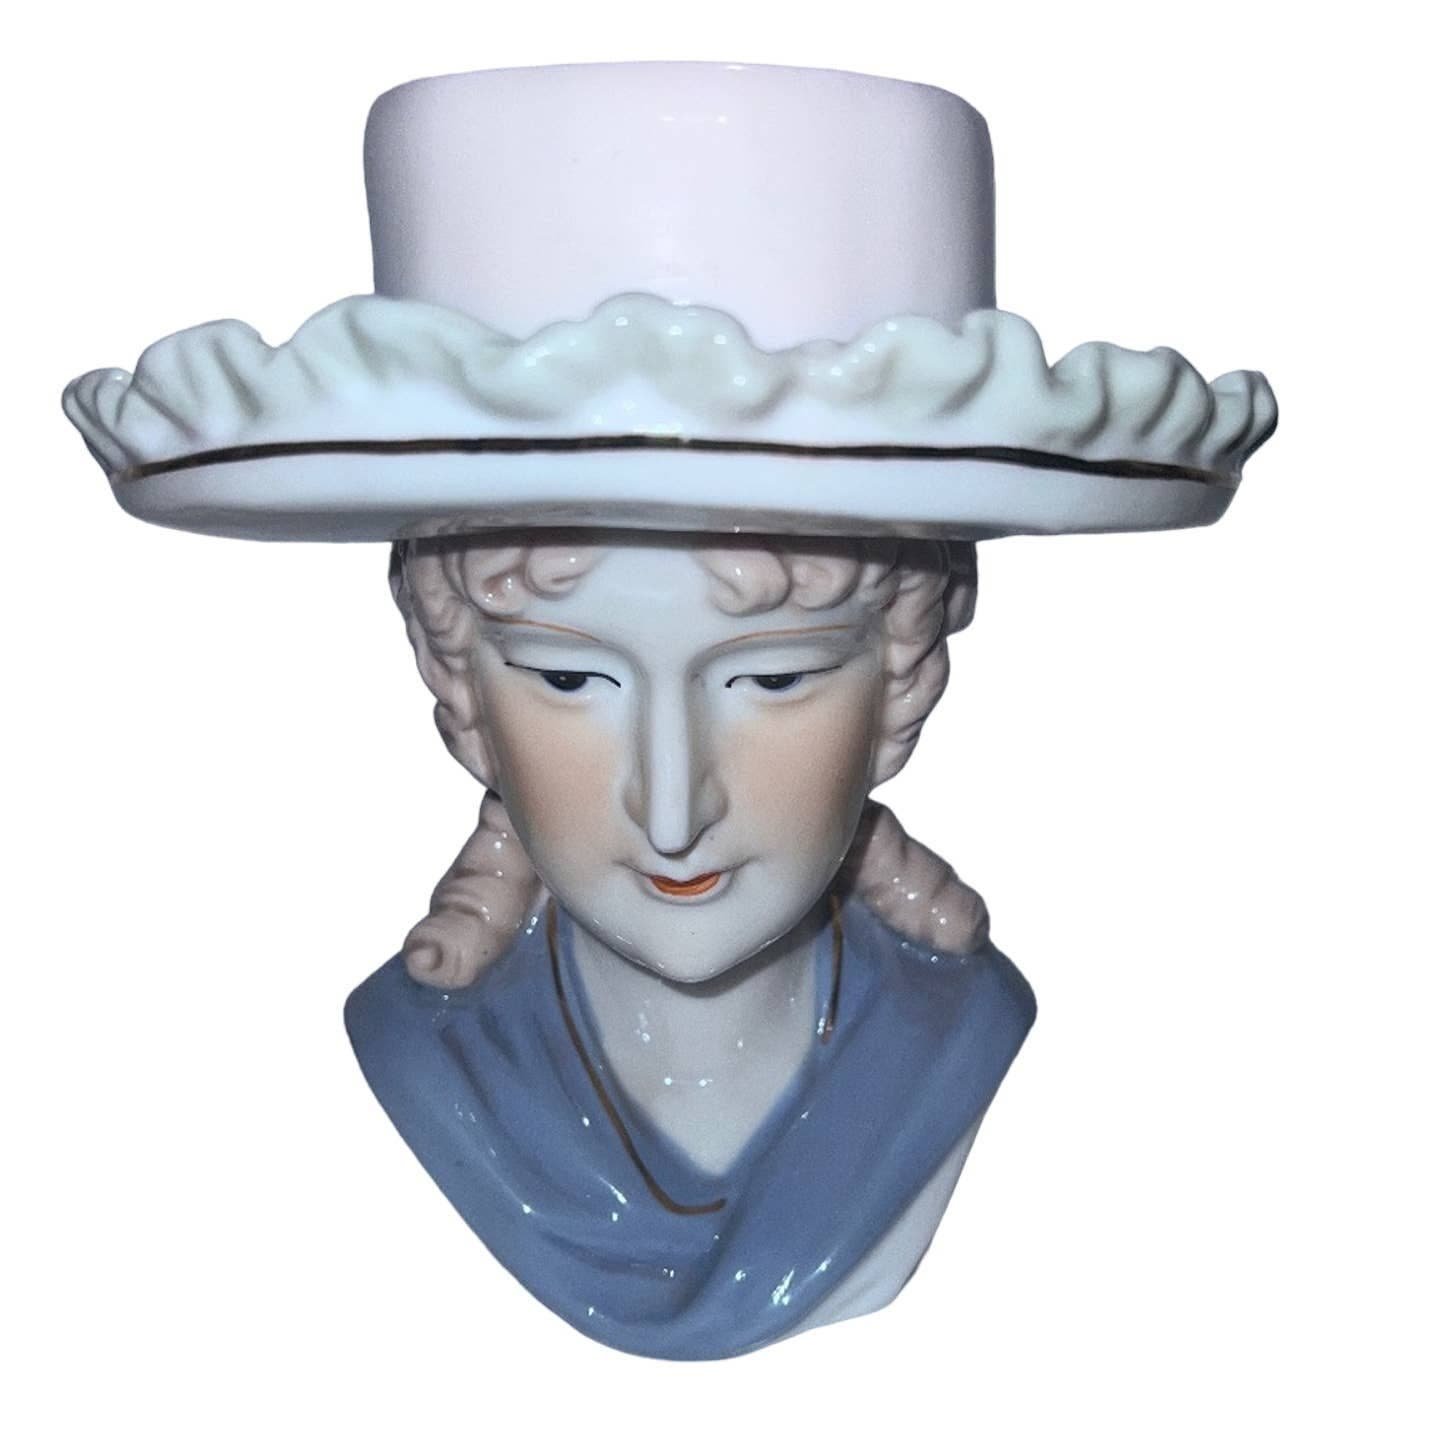 Lady Head Vase Planter Light Blue & White Wide Brim Hat 7